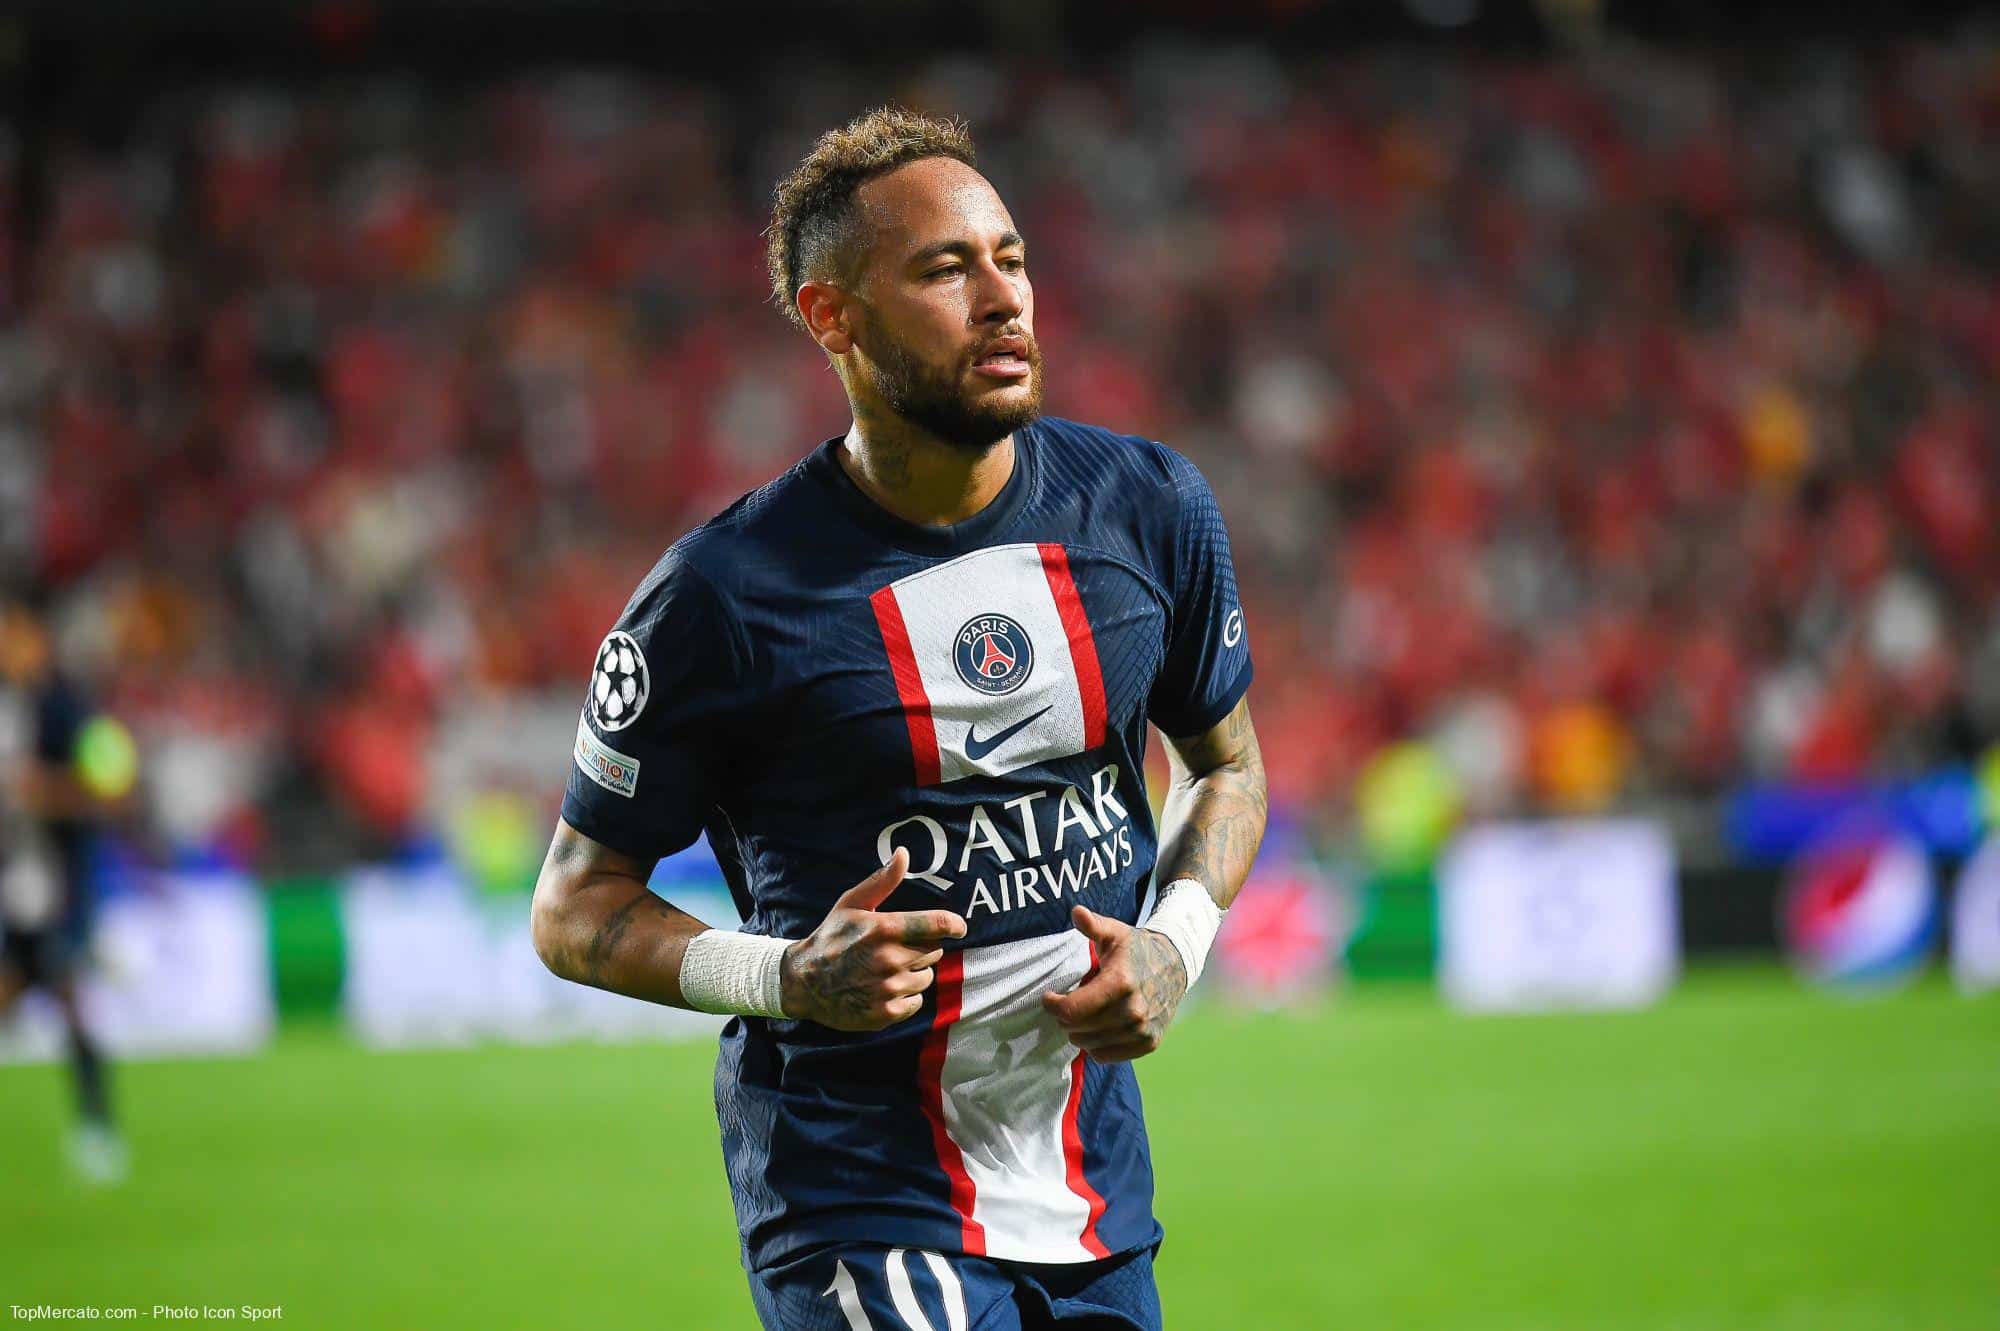 Transfert : Un club anglais se lance pour recruter Neymar Jr